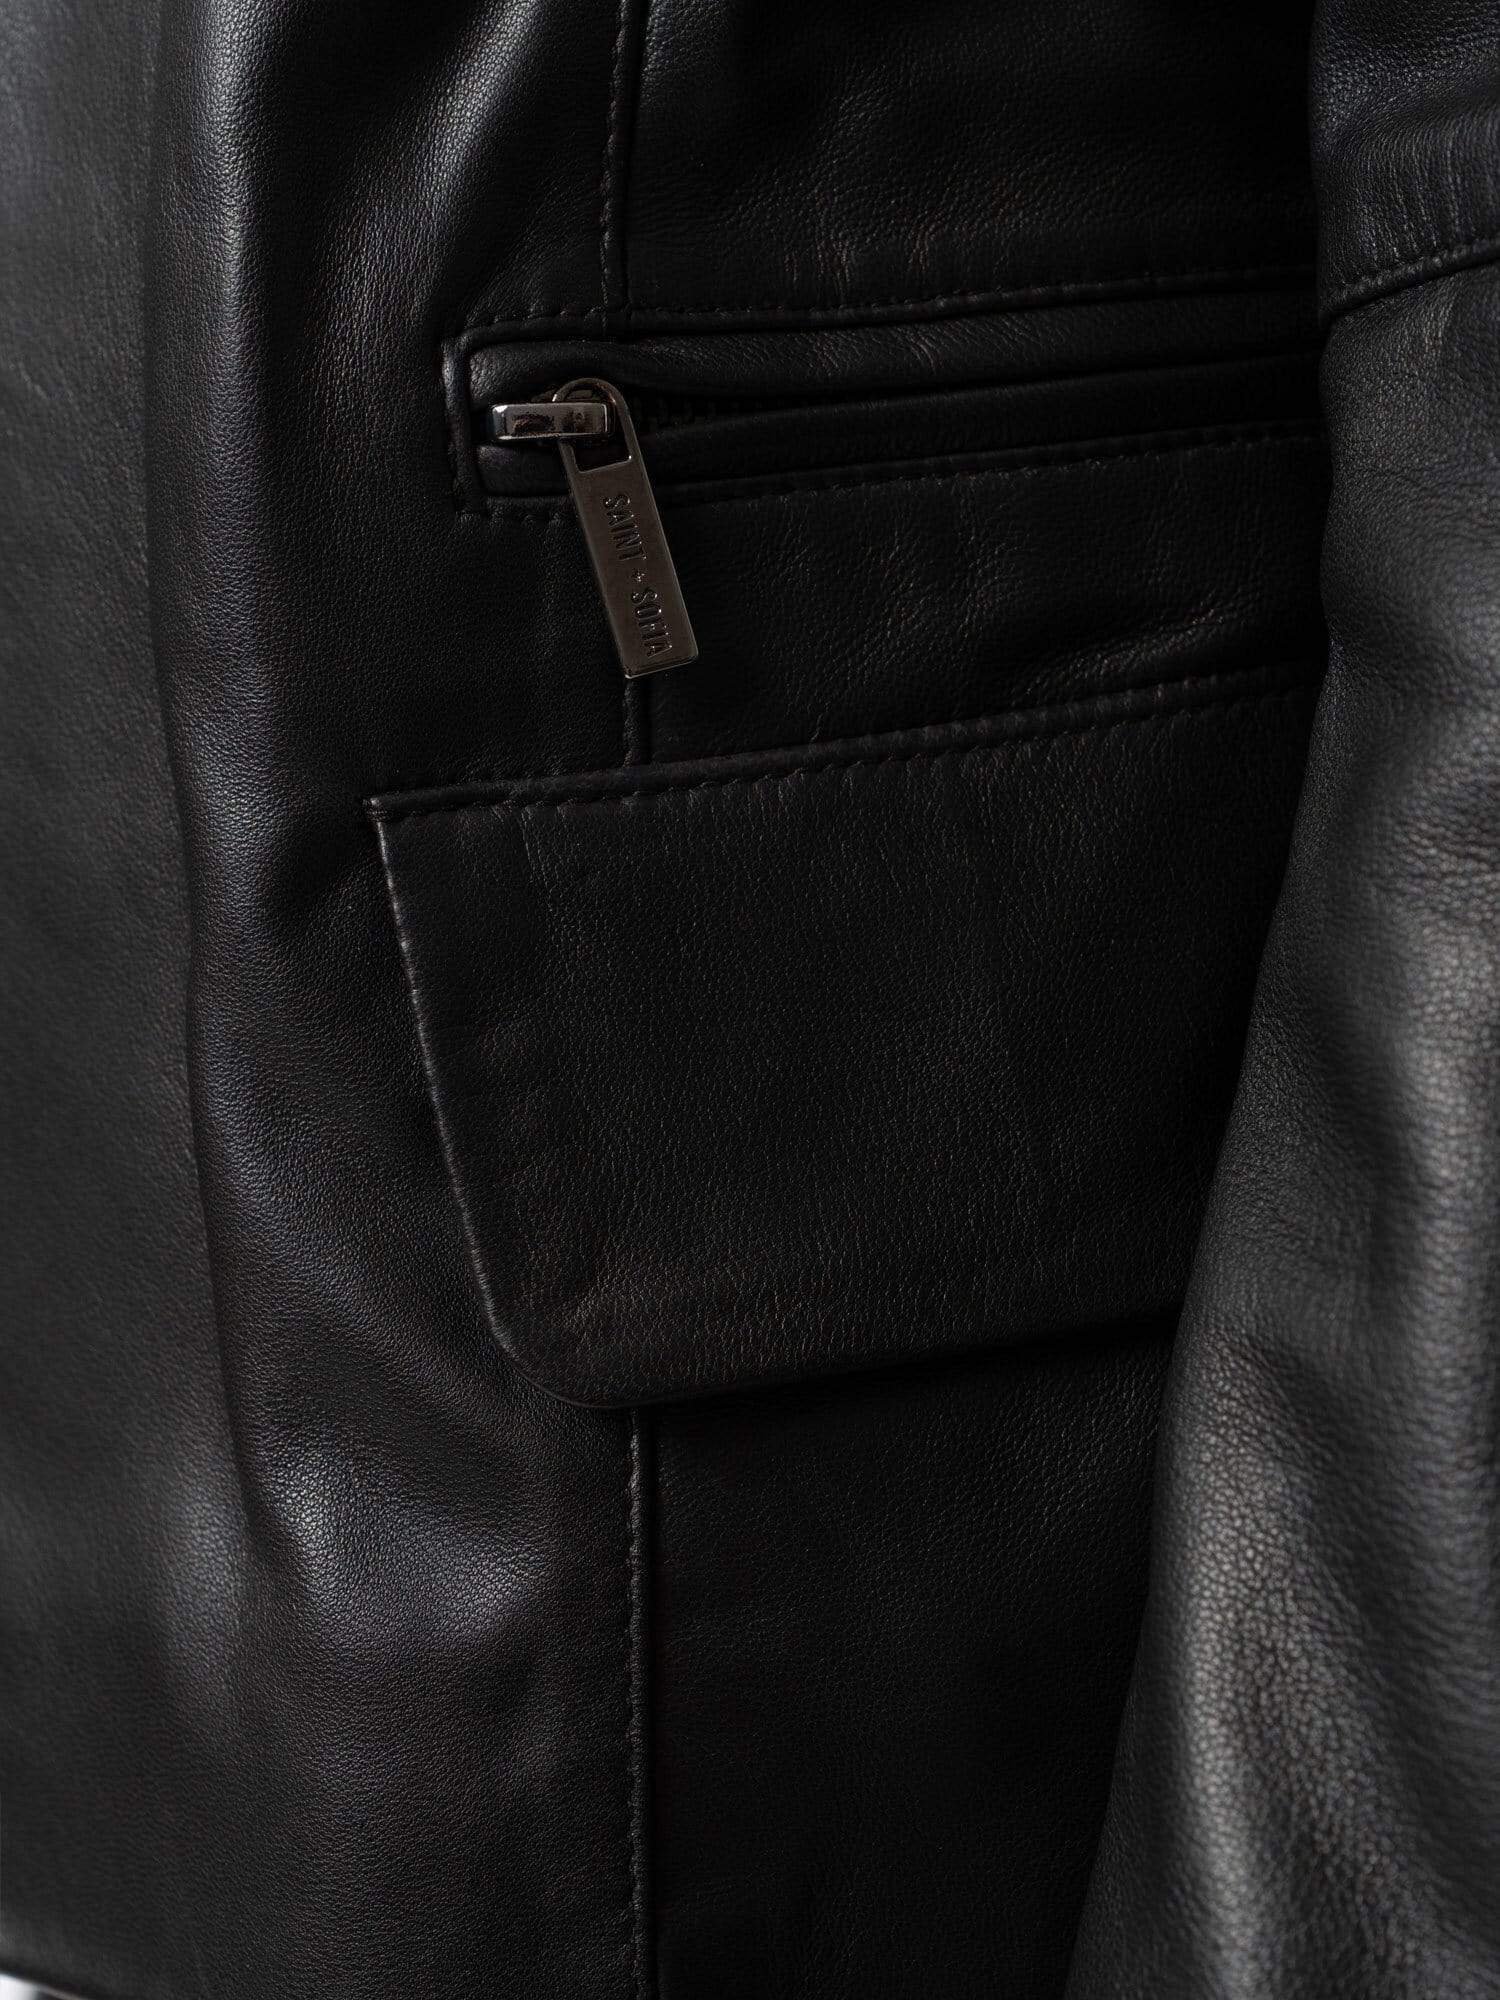 Women's Leather Jacket Black Friday Sale 2023 - The Jacket Maker Blog